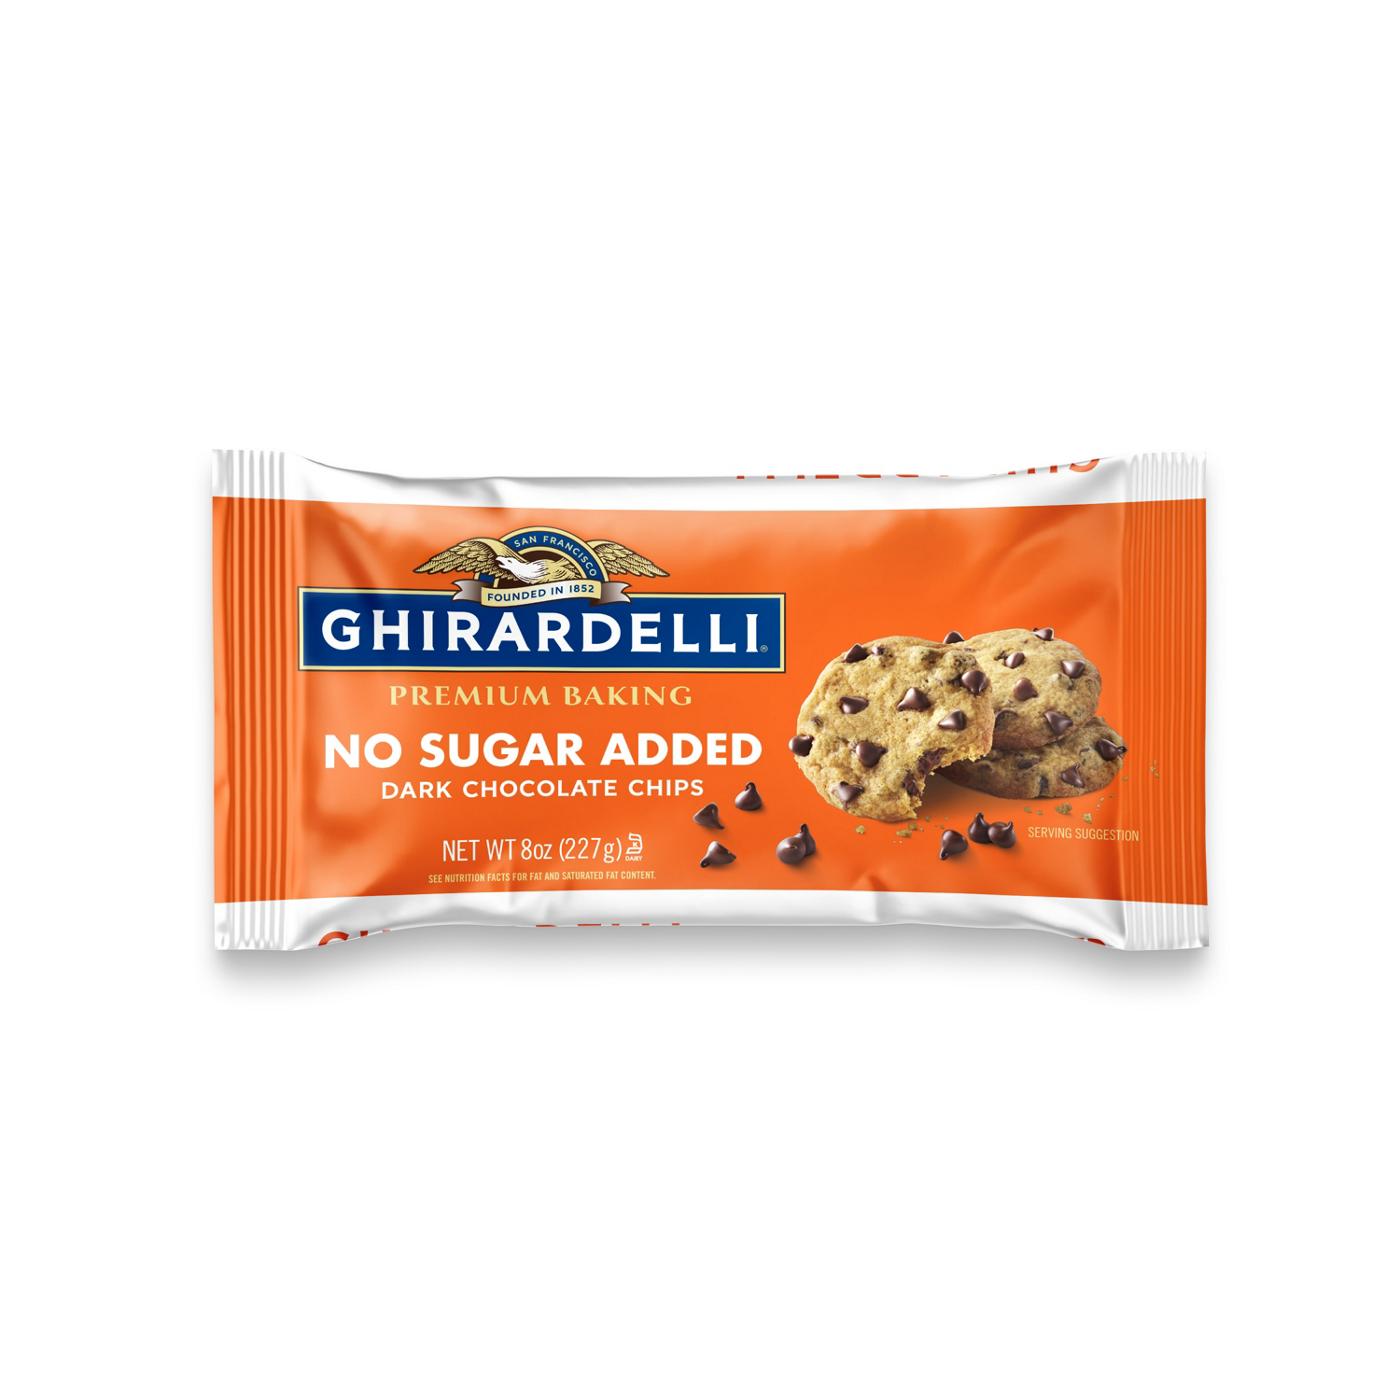 Ghirardelli Premium Baking No Sugar Added Dark Chocolate Chips; image 1 of 2